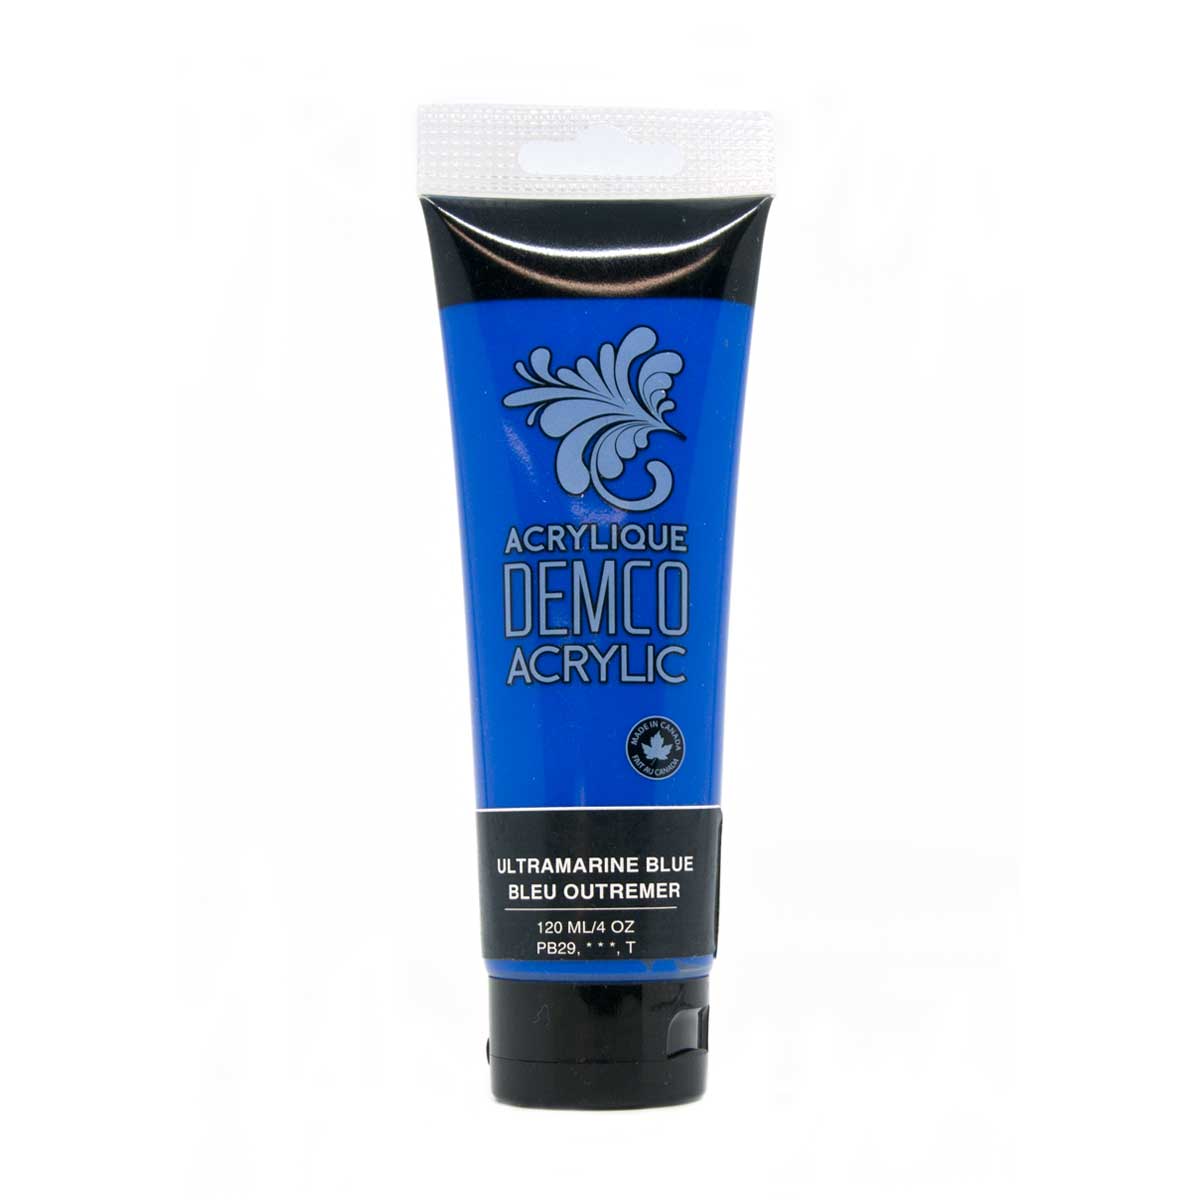 Demco Acrylic Ultramarine Blue 120ml/4oz